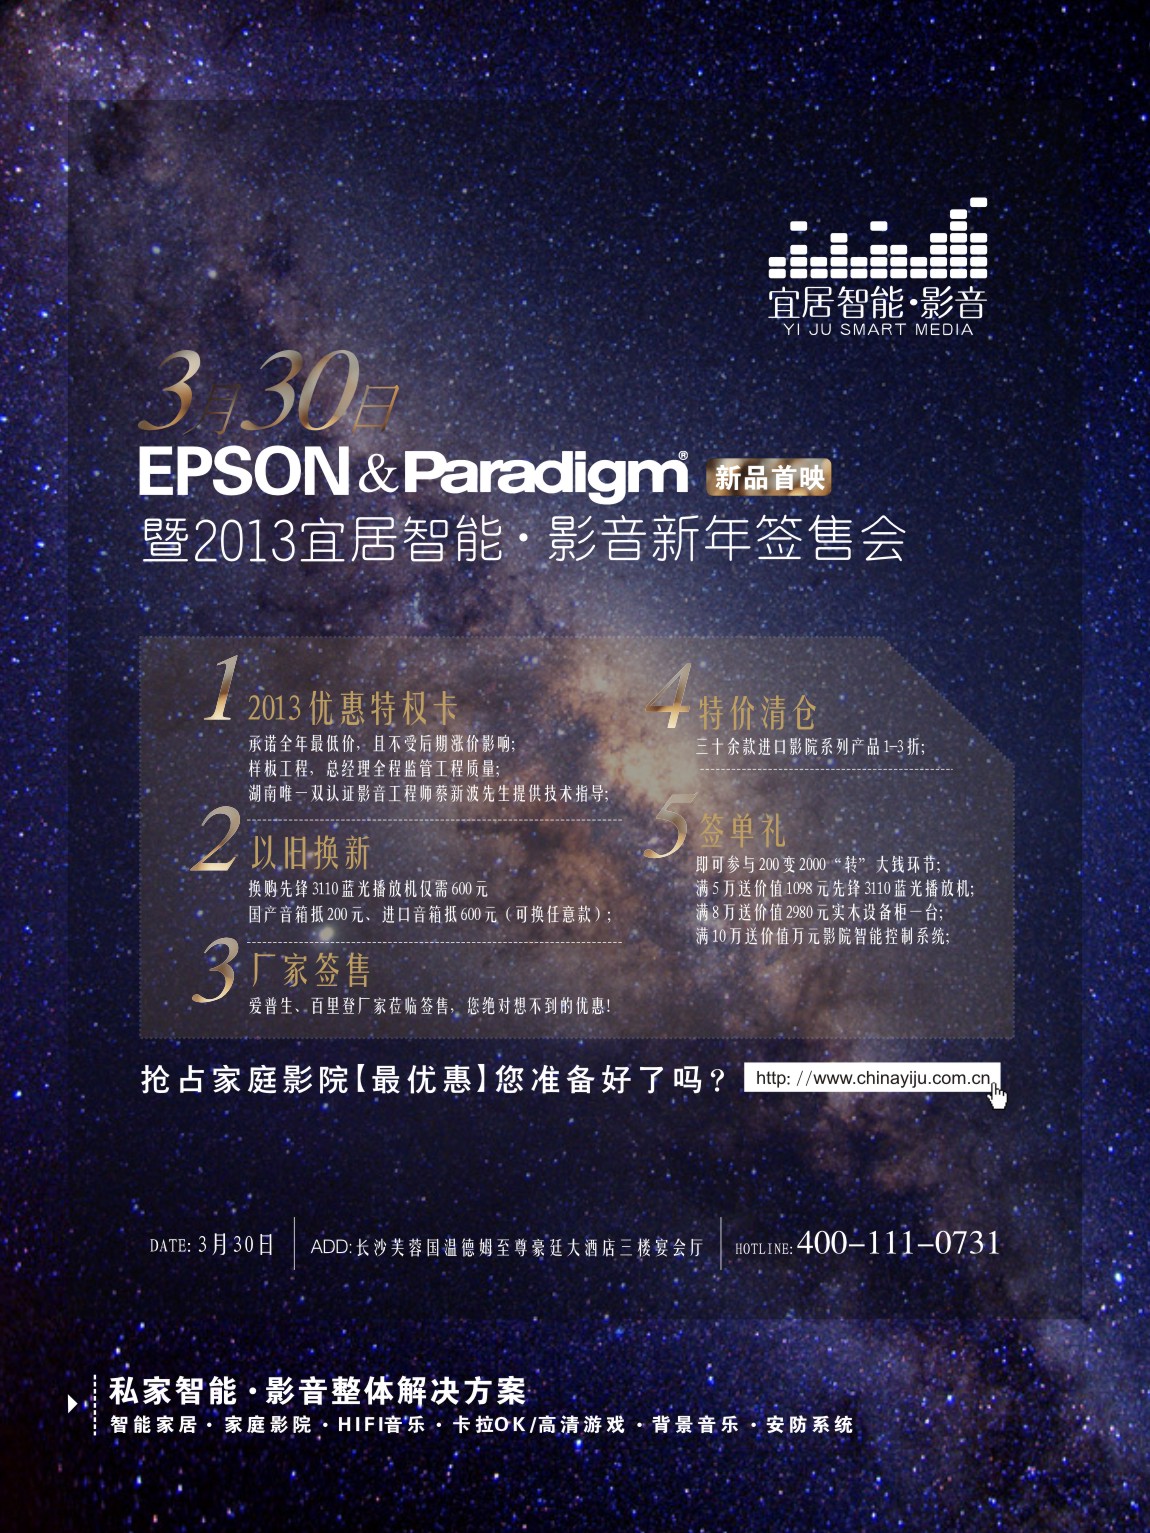 Epson&Paradigm新品首映礼